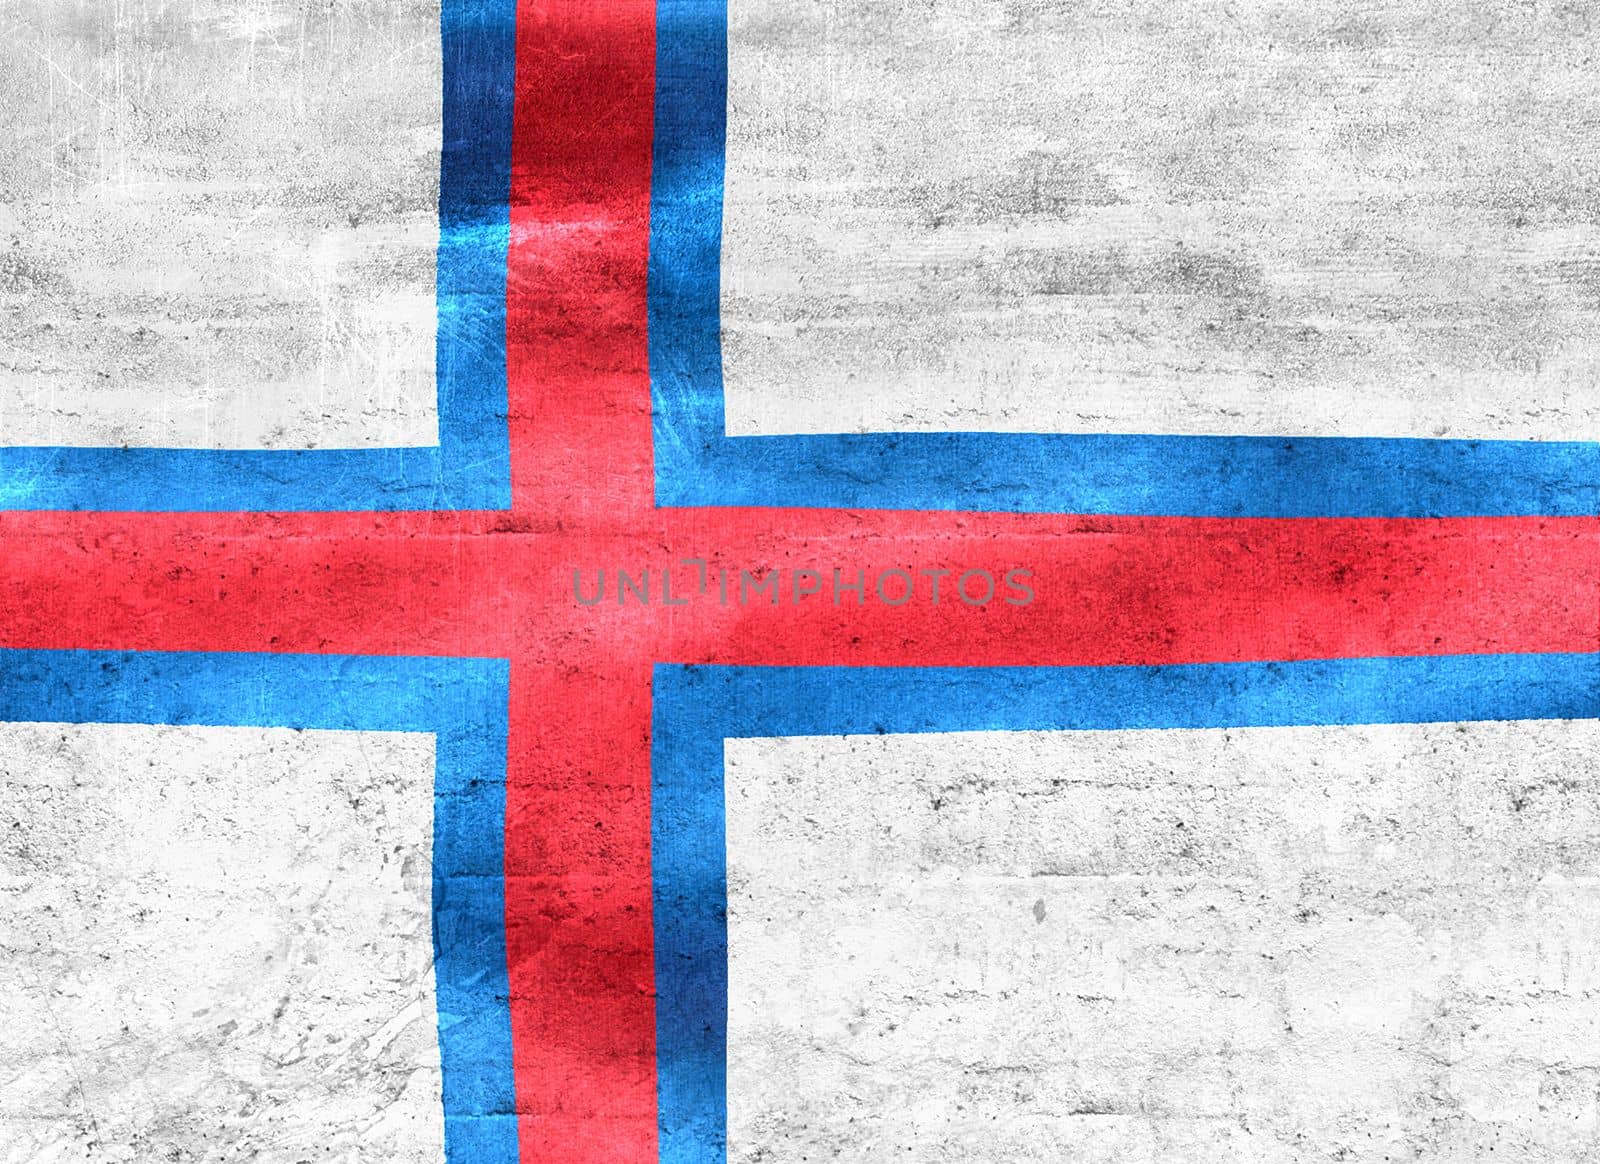 Faroe Islands flag - realistic waving fabric flag by MP_foto71